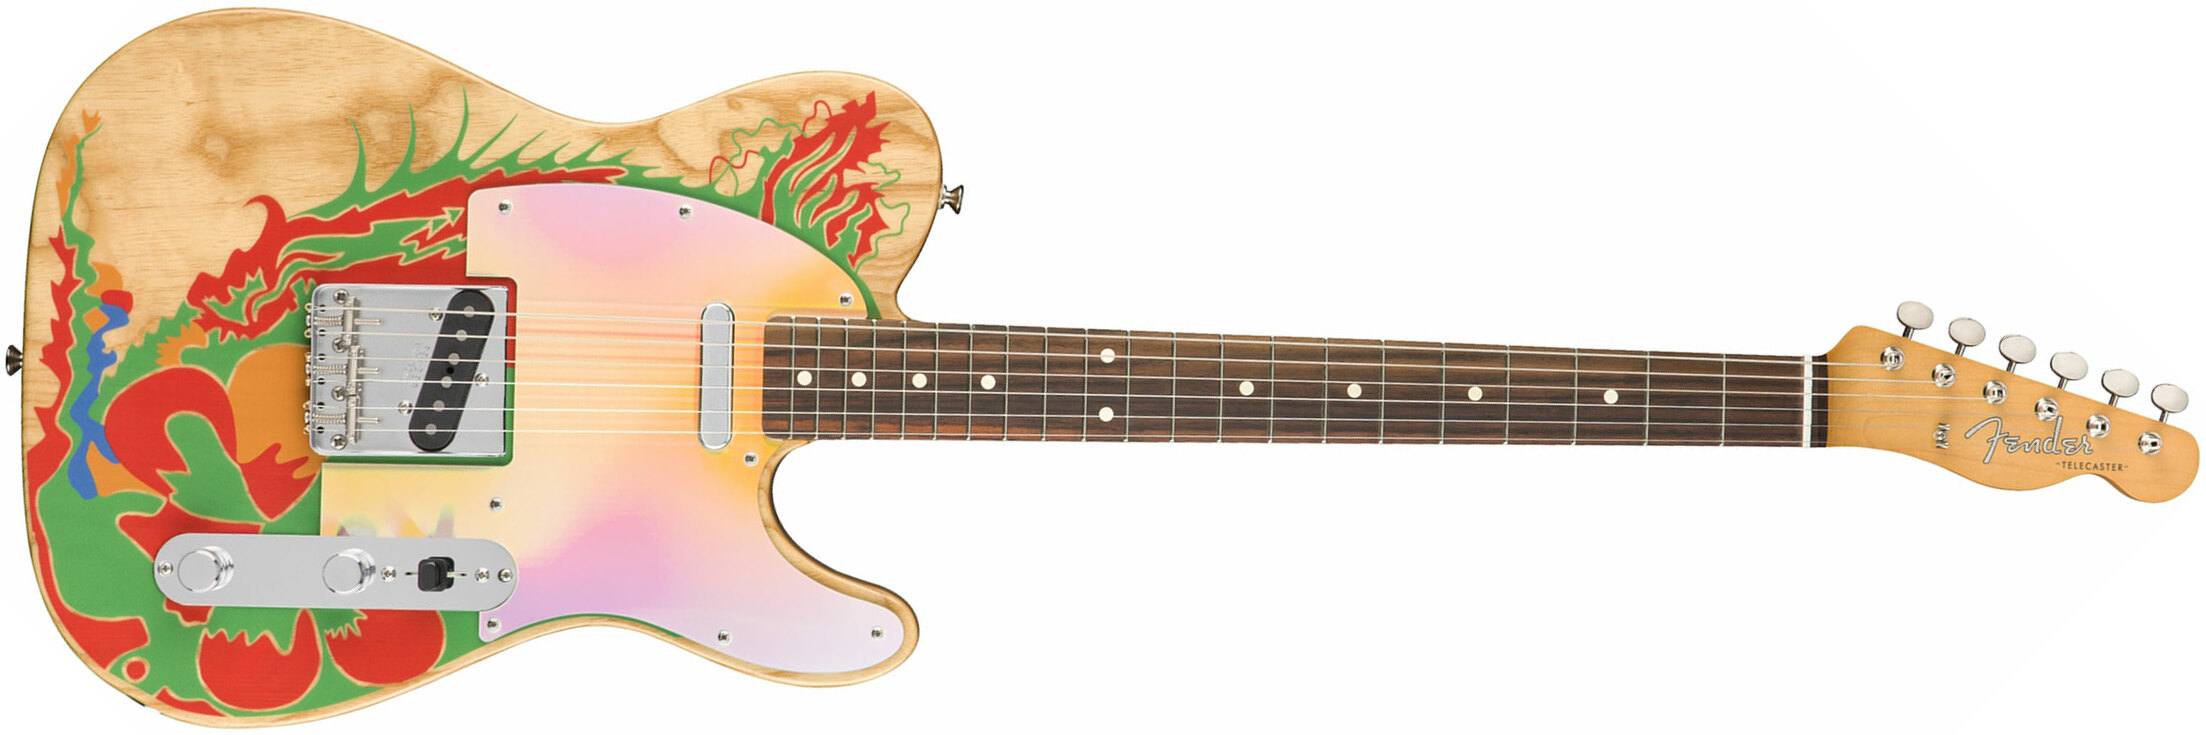 Fender Jimmy Page Tele Dragon Ltd Mex Signature Rw - Natural - Televorm elektrische gitaar - Main picture